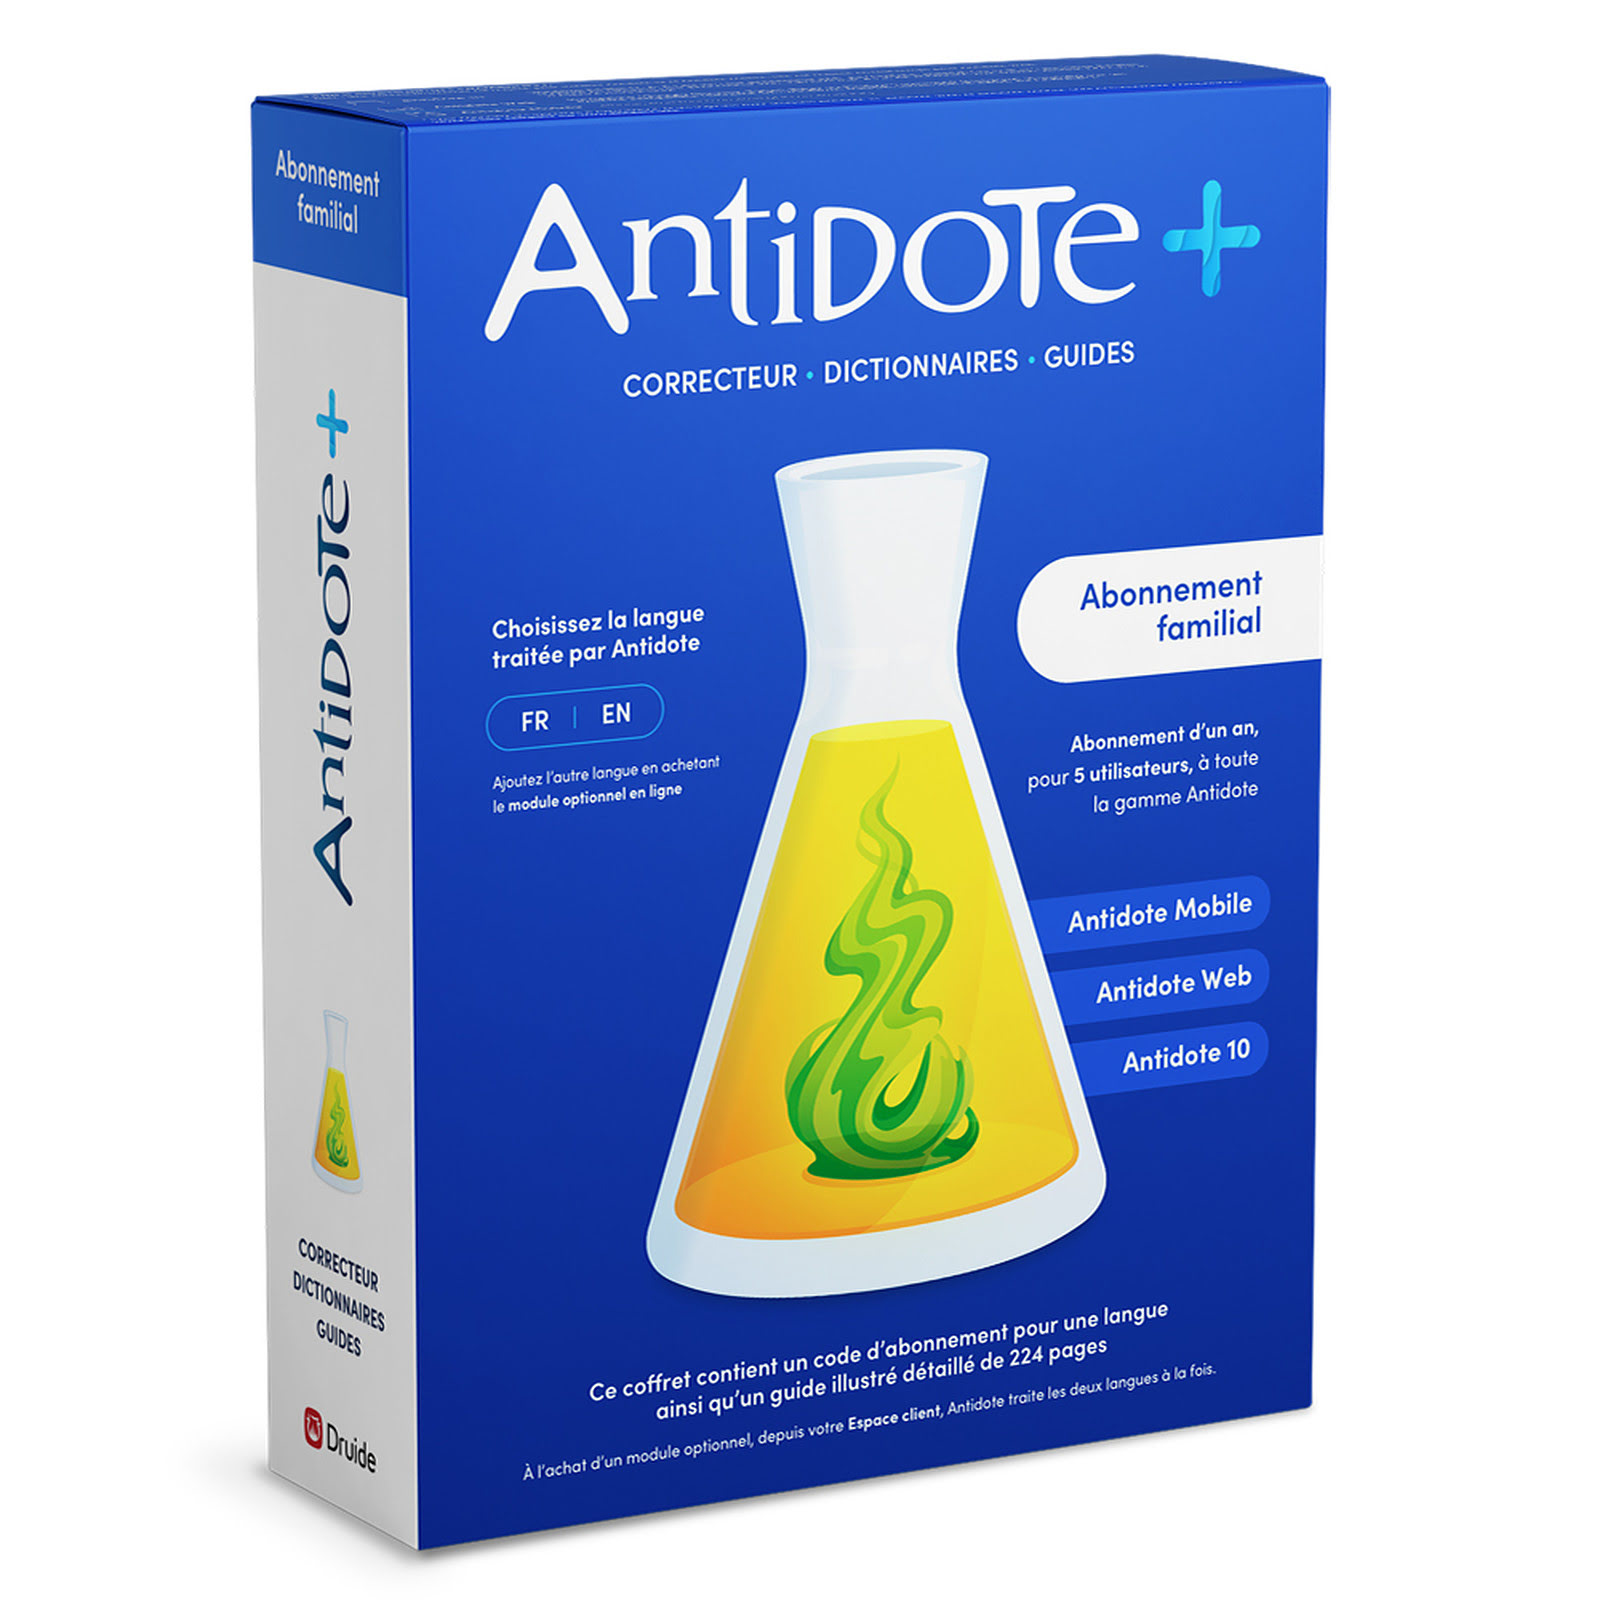 Druide Antidote+ Familial 11 - 1 an/5 PC - Boîte - Logiciel application - 0